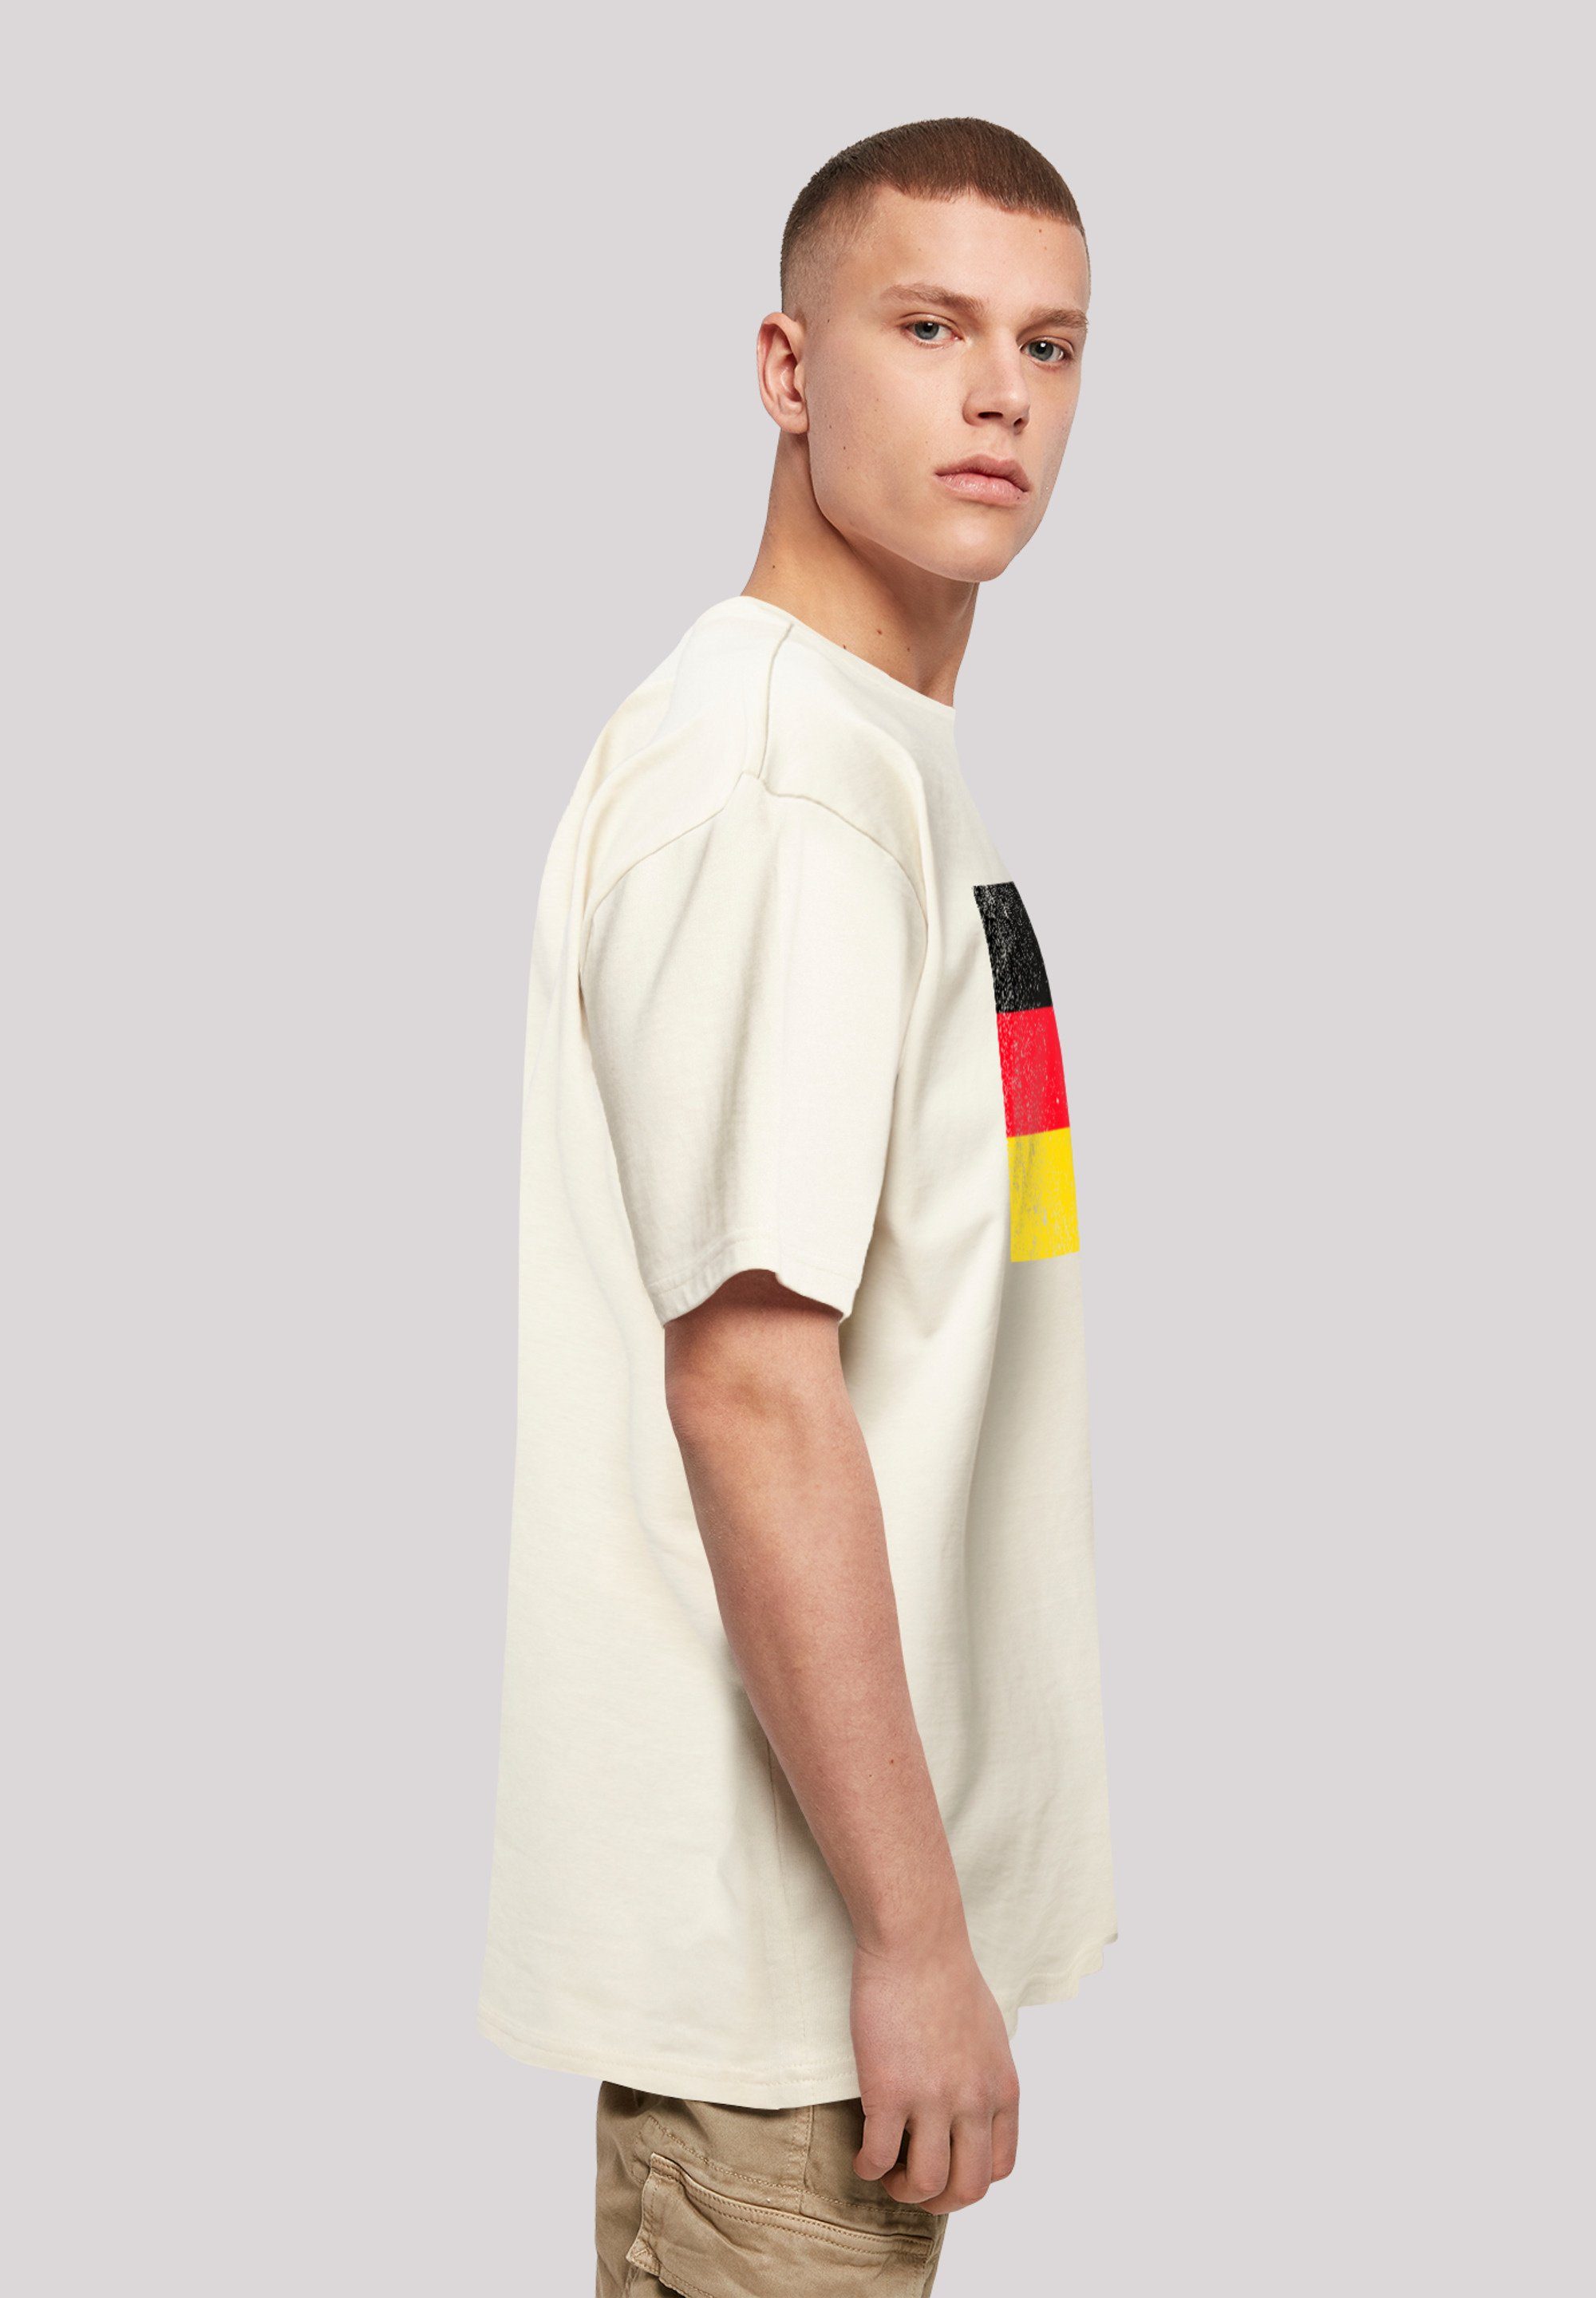 distressed Print T-Shirt Germany sand Deutschland F4NT4STIC Flagge